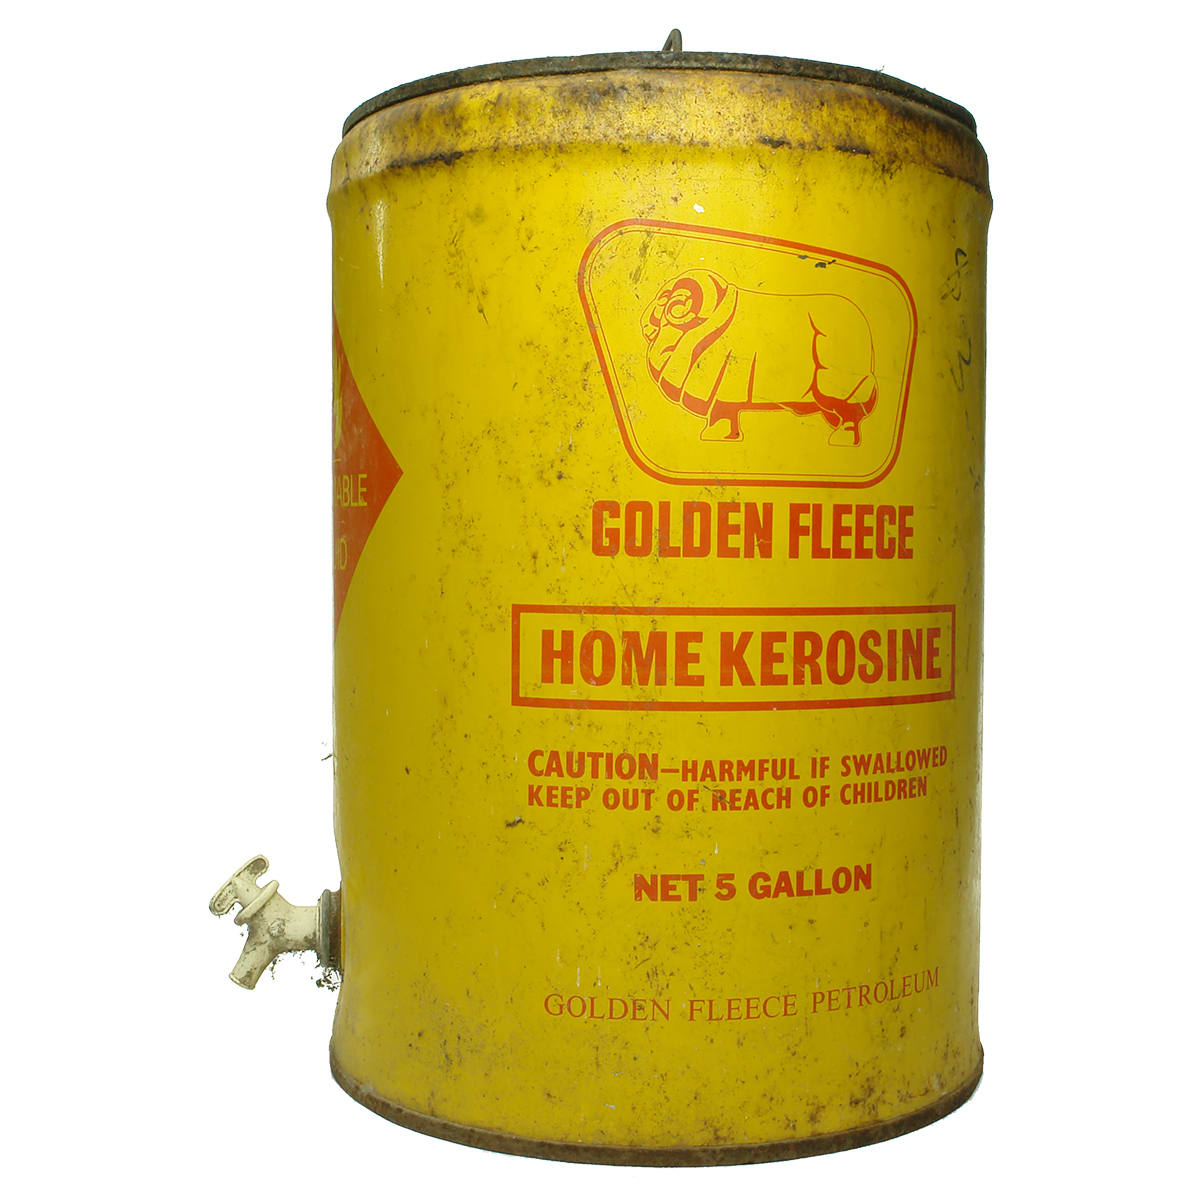 Tin. Golden Fleece Home Kerosine. 5 Gallon.